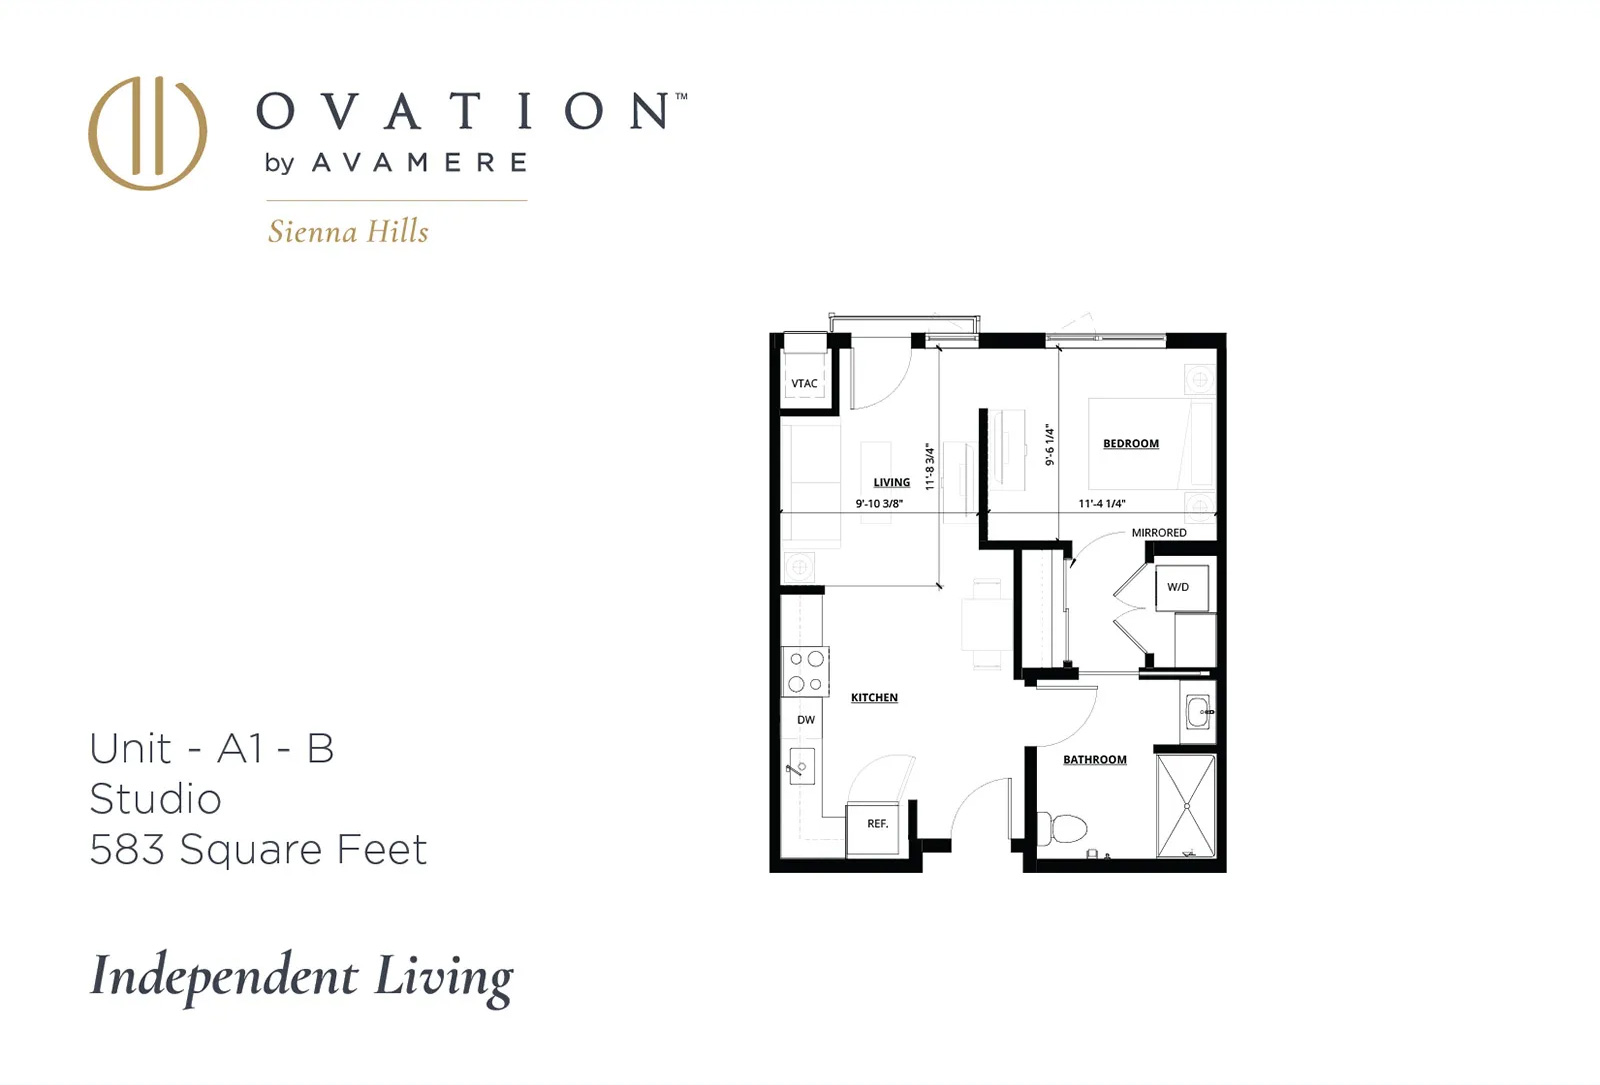 Ovation Sienna Hills Independent Living Floorplan Studio 583 sq ft